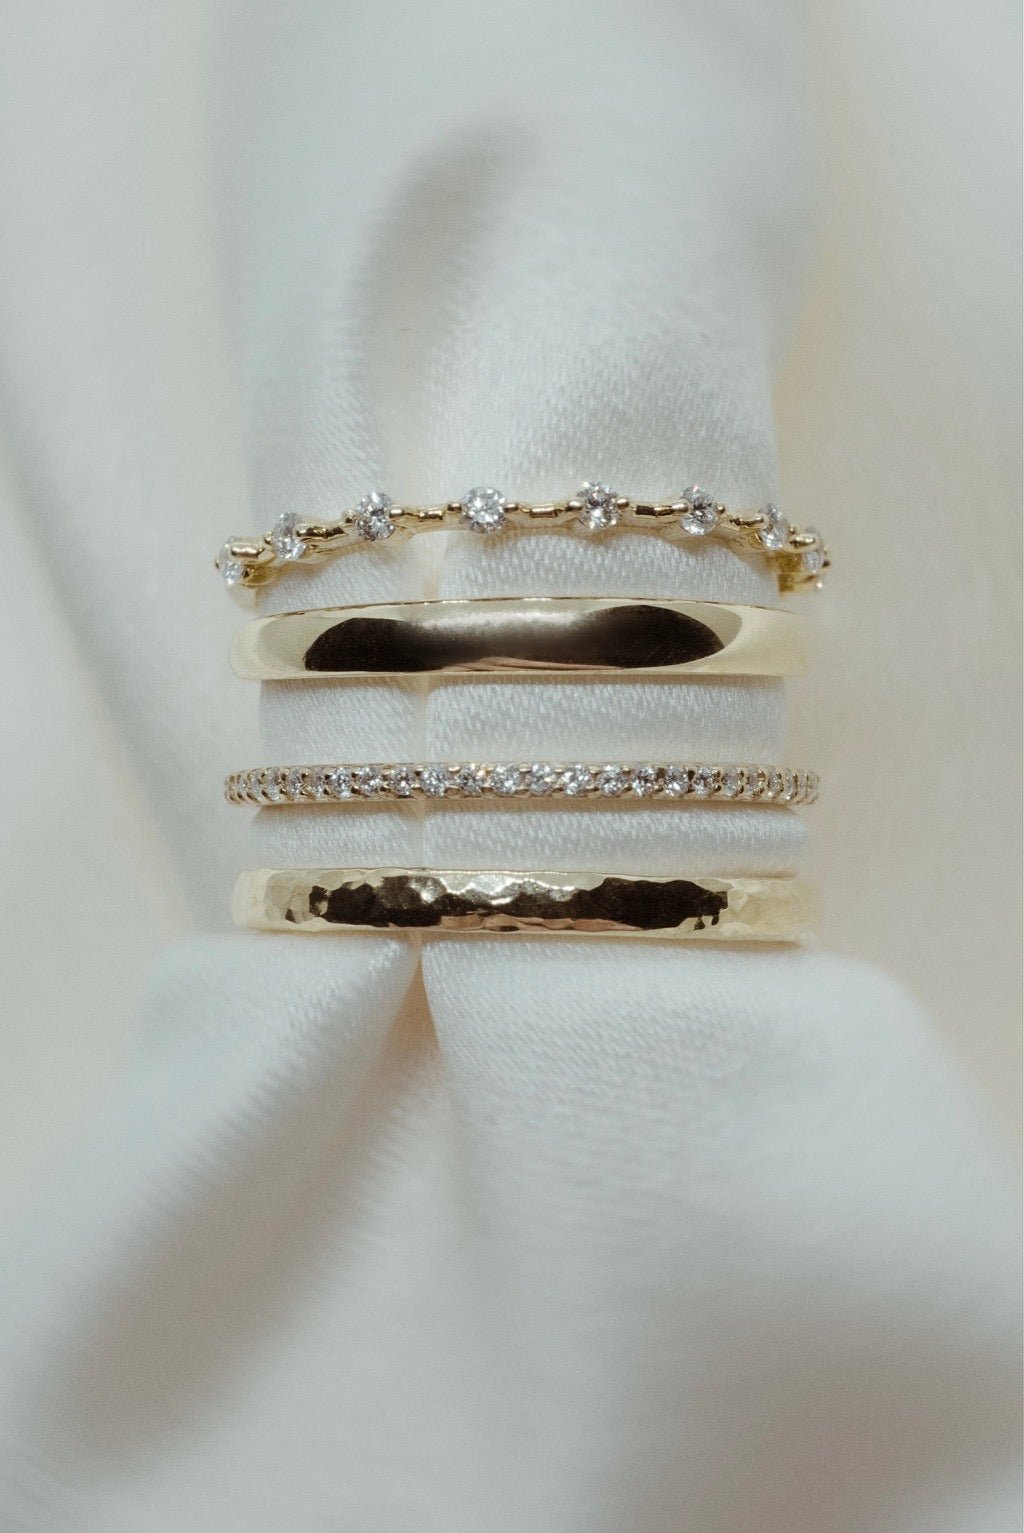 Tapered band - Lelya - bespoke engagement and wedding rings made in Scotland, UK